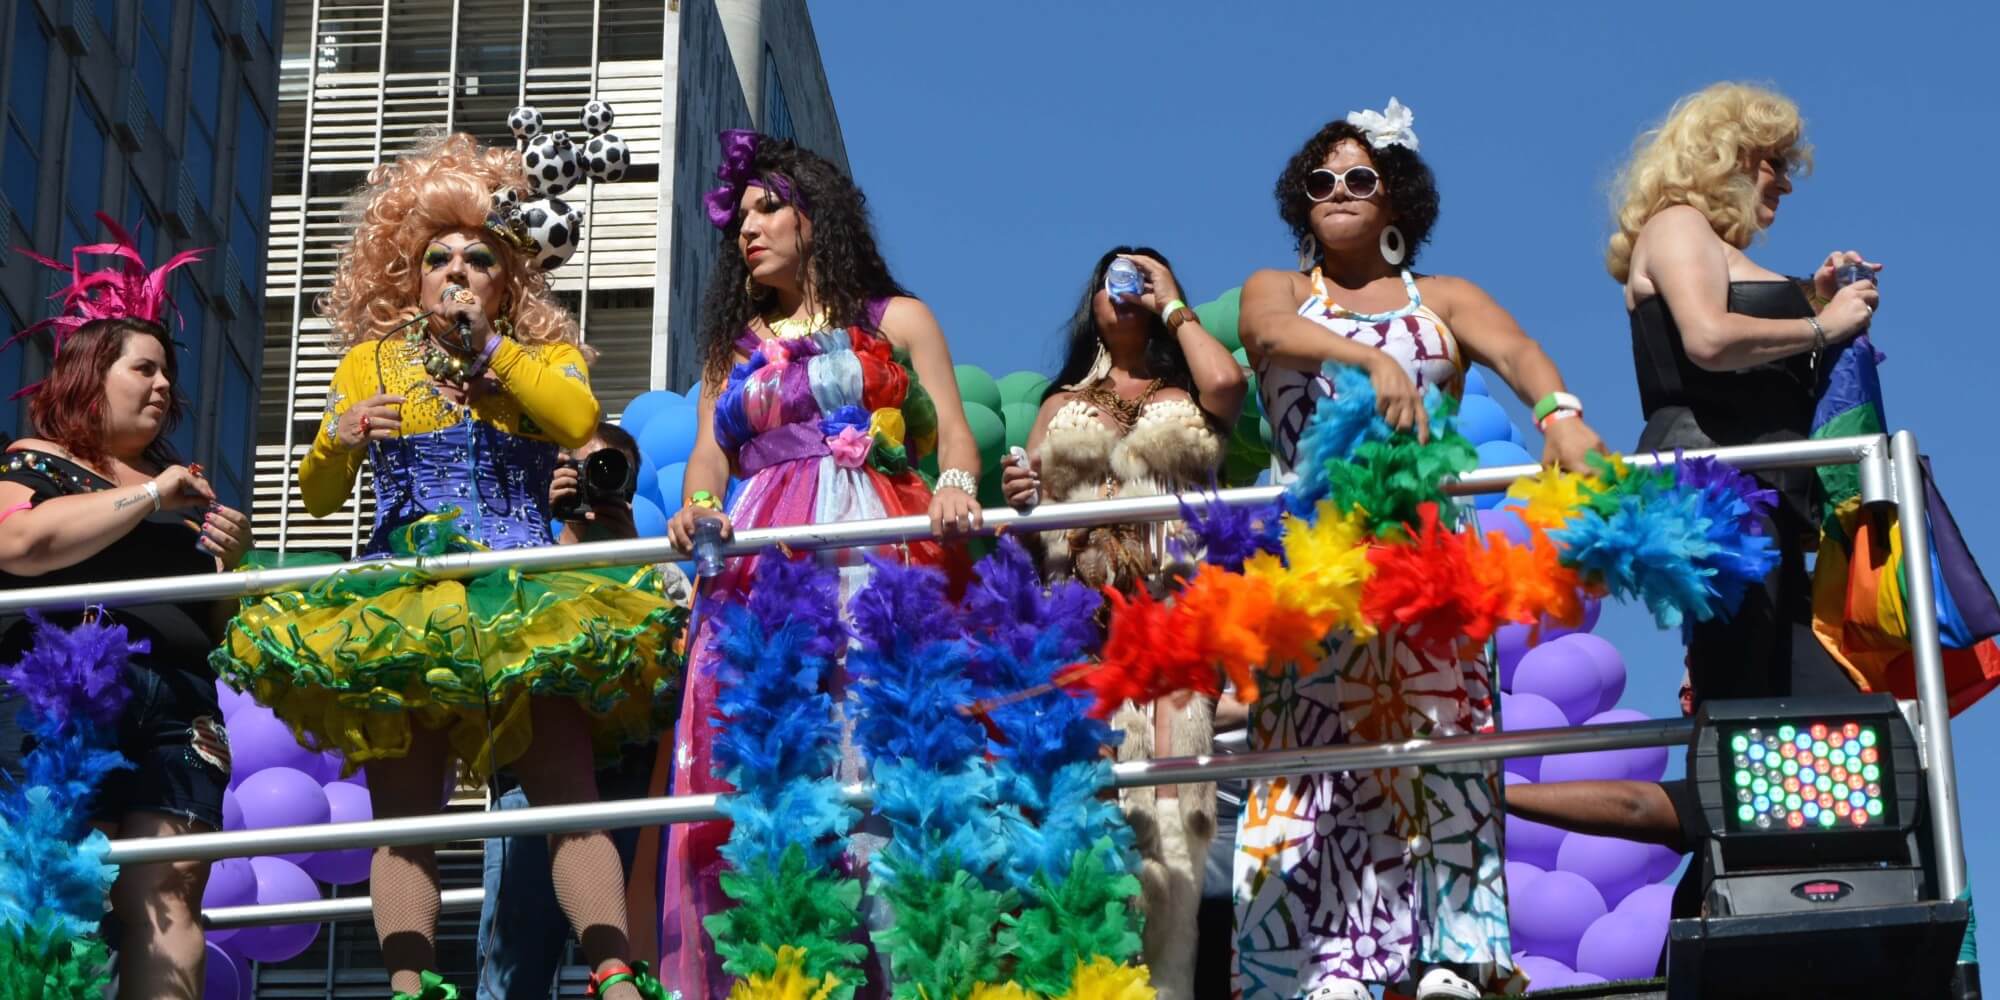 Mai tanti morti LGBT in Brasile: i numeri del 2017 tra omicidi e suicidi - brasile 2 - Gay.it